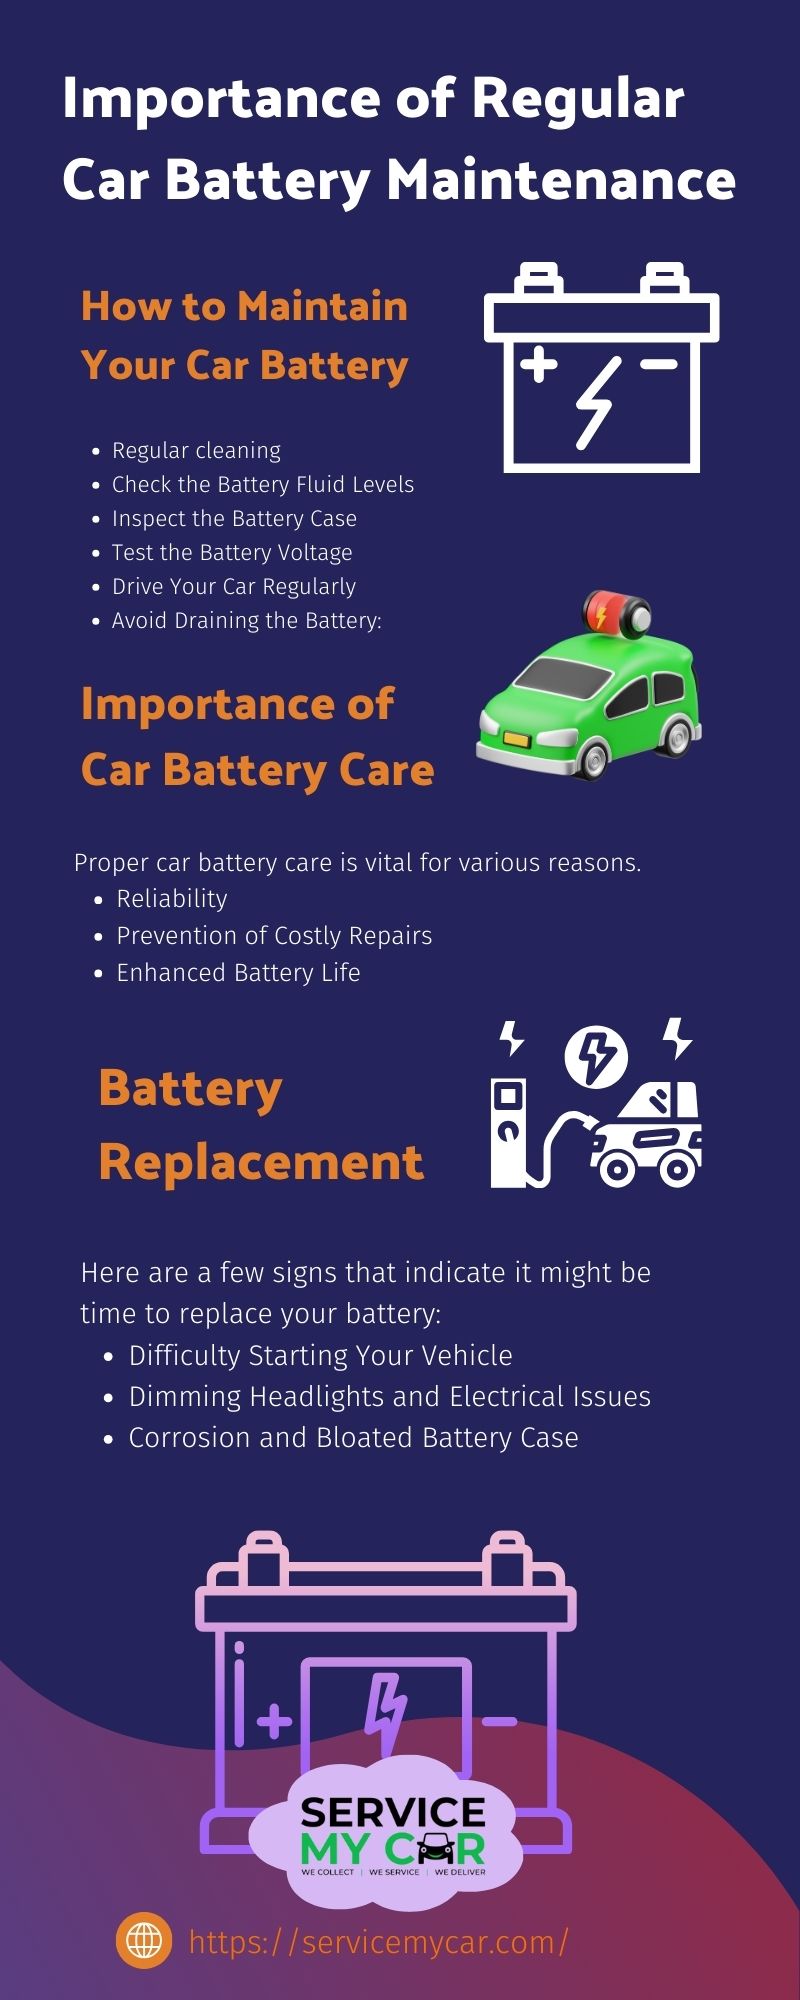 The Importance of Regular Car Battery Maintenance